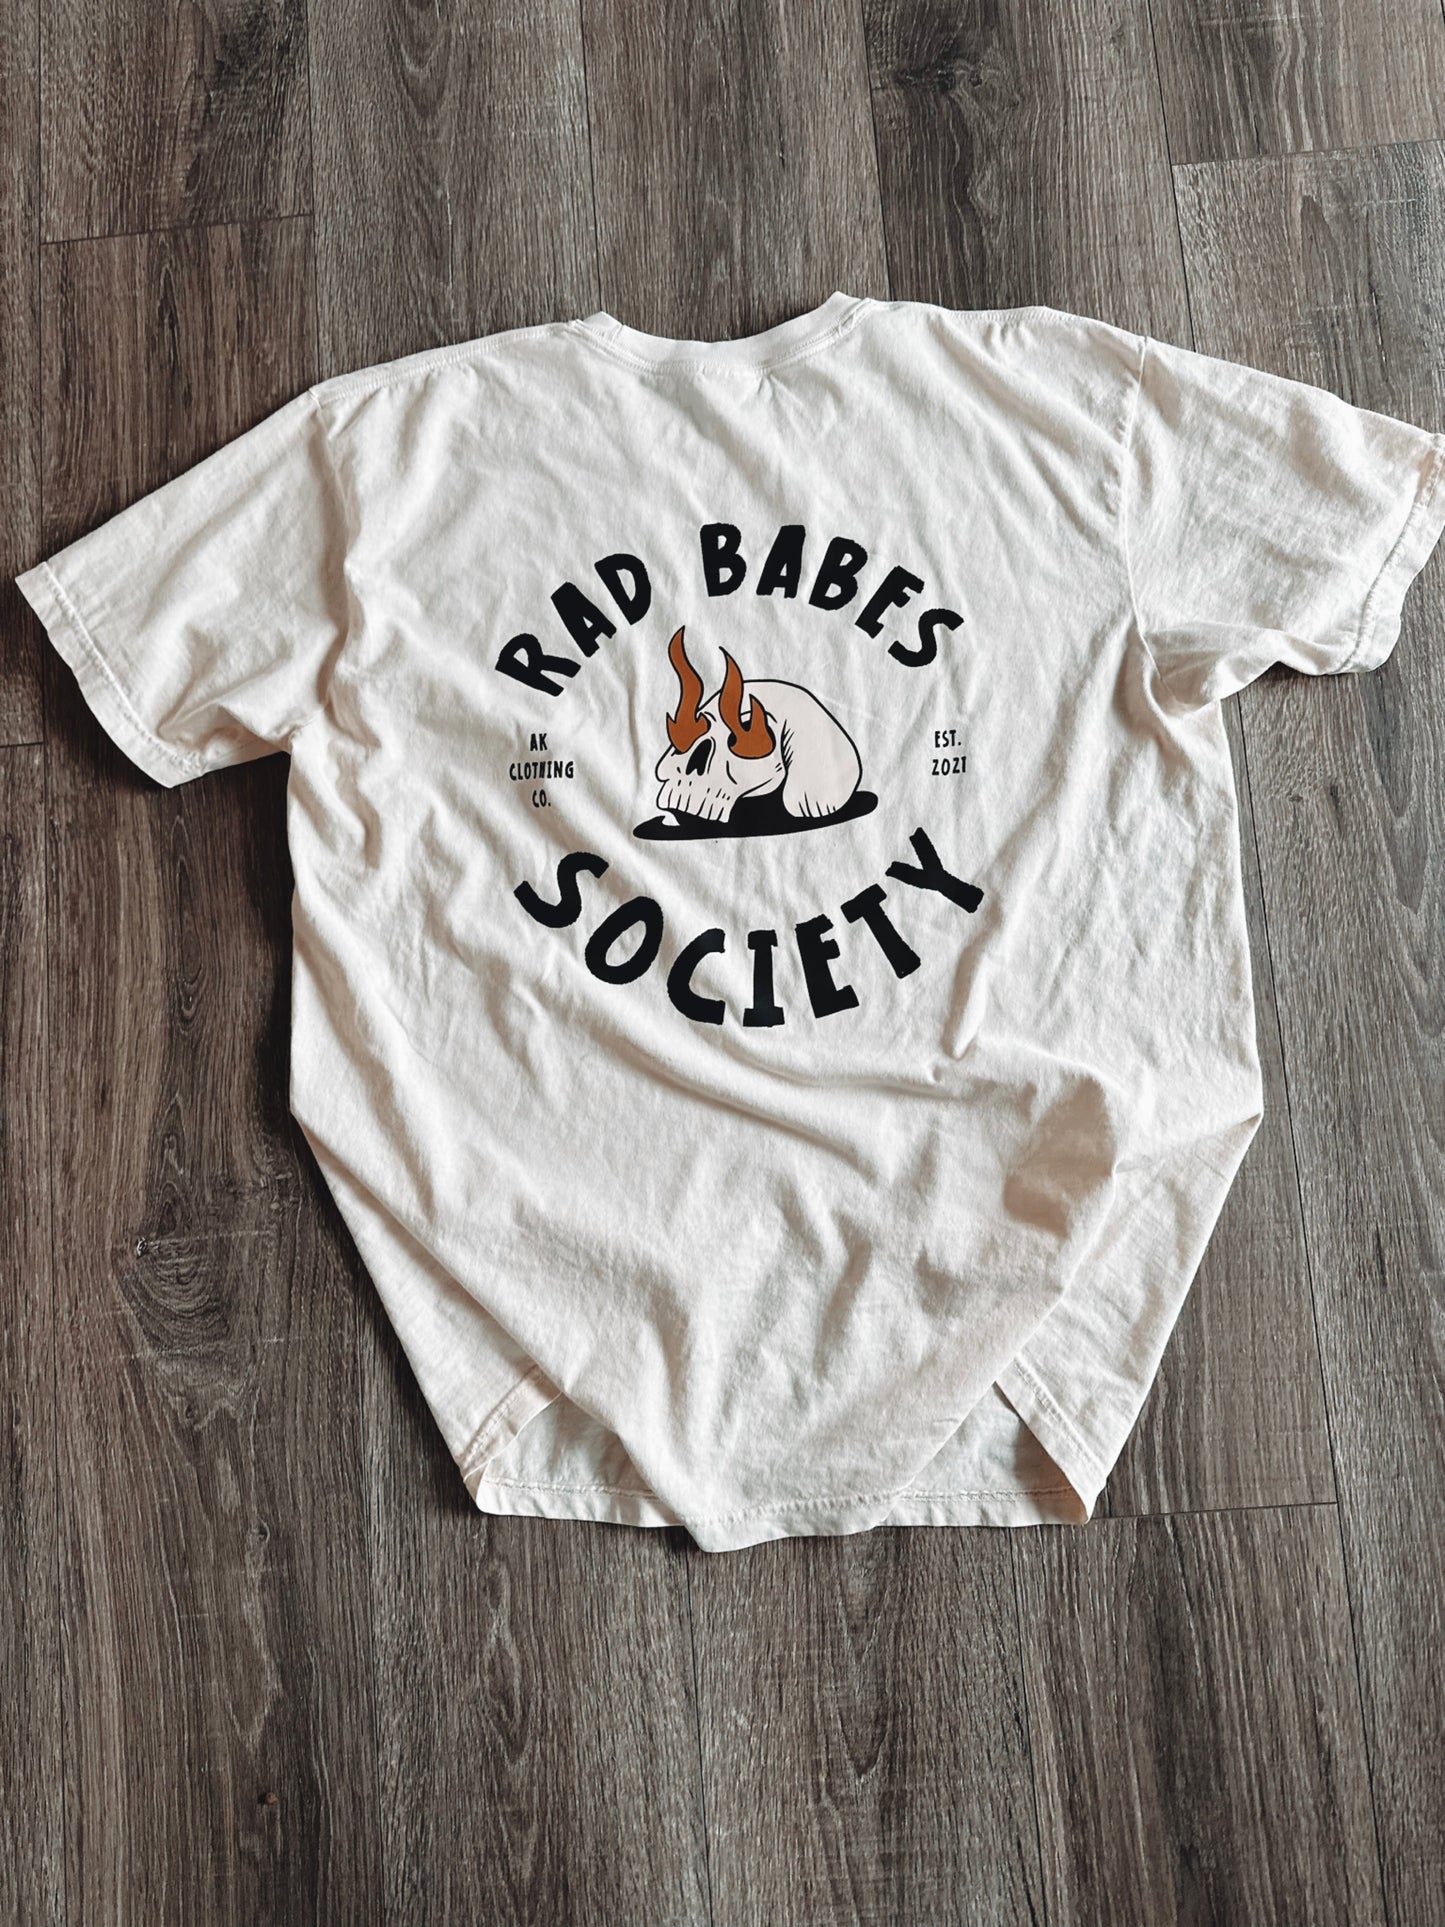 Rad Babes Society